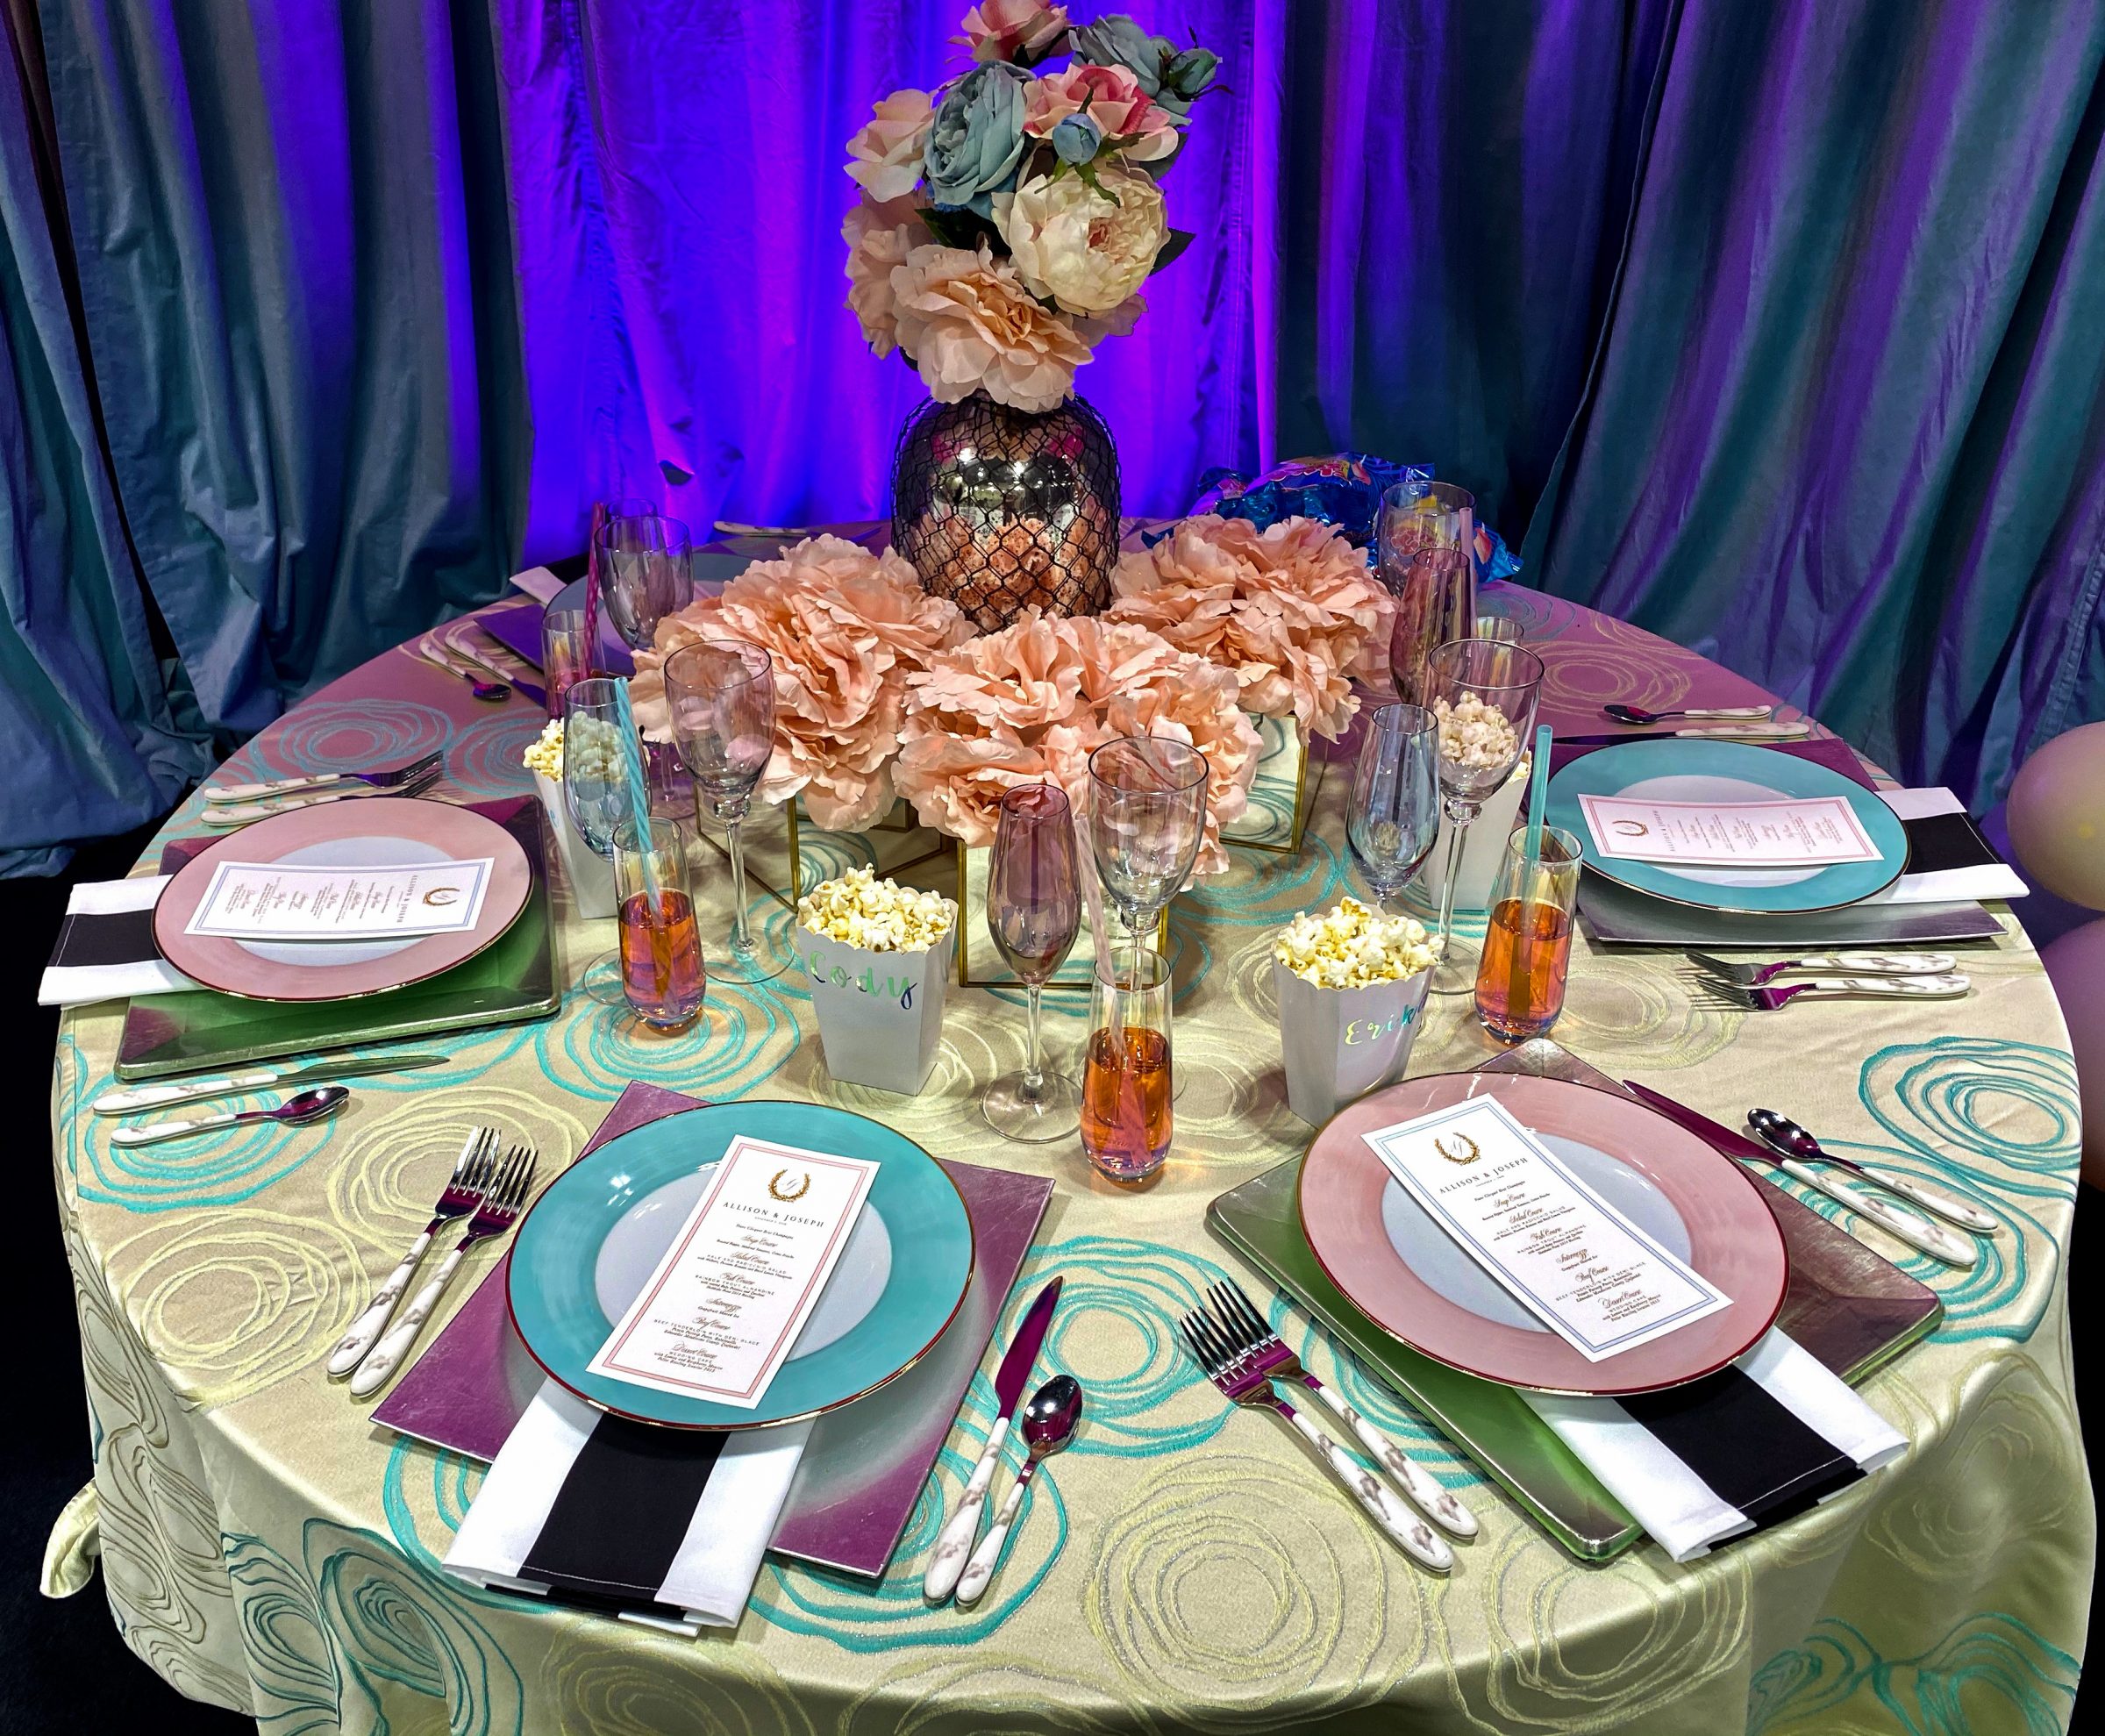 Wedding plates and tabletop decor